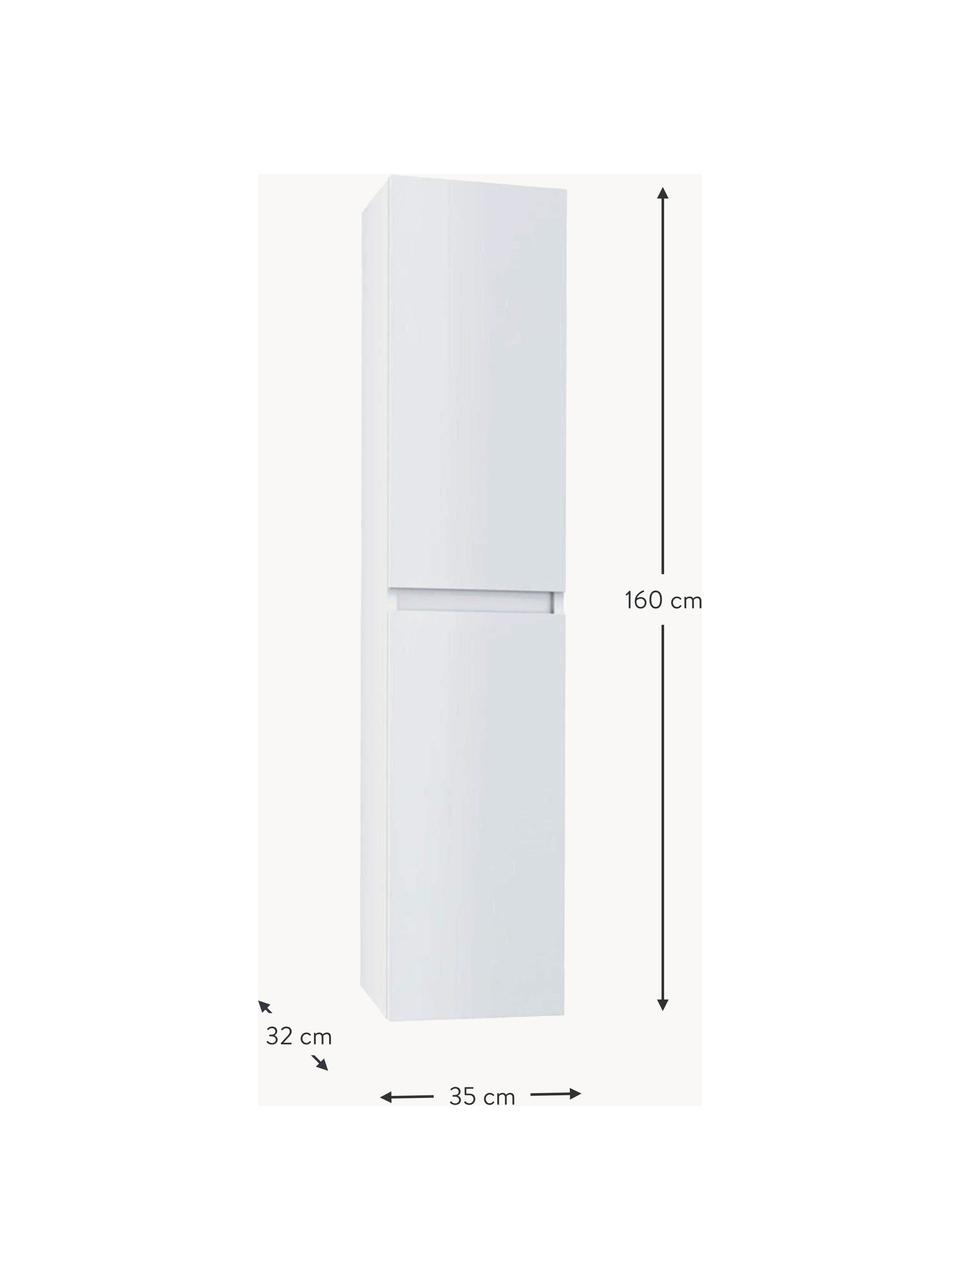 Vysoká koupelnová skříňka Perth, Š 35 cm, Bílá, Š 35 cm, V 160 cm